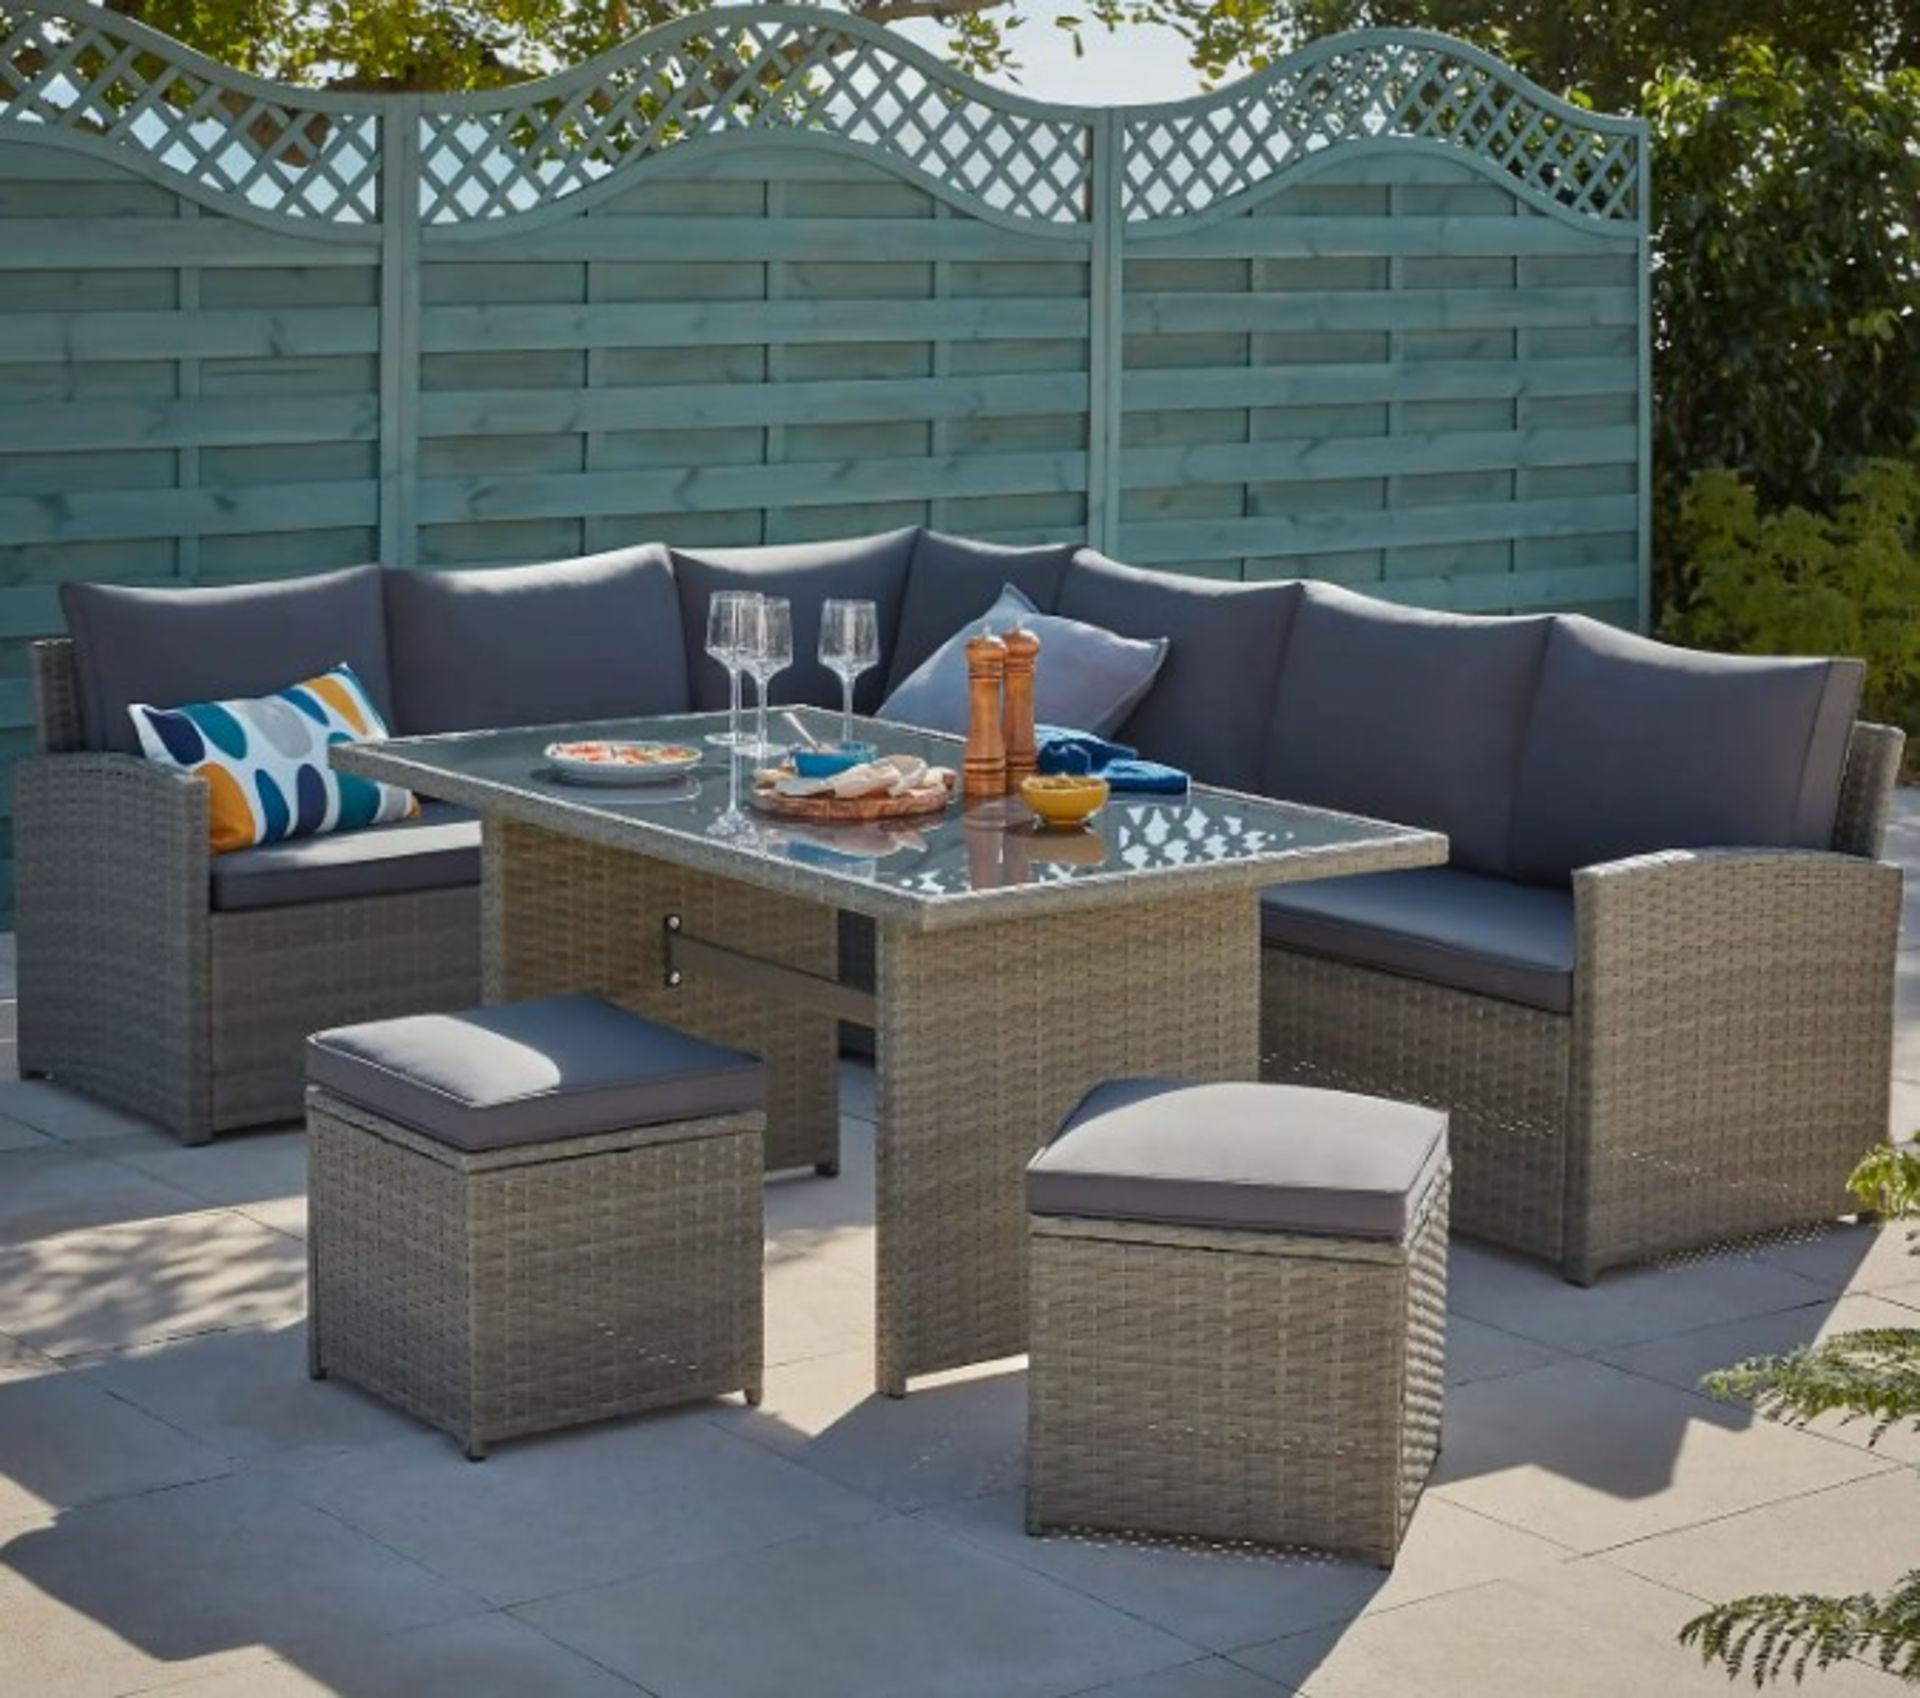 (12/P) RRP £850. Matara Grey Rattan Corner Garden Sofa Set. Ideal For Both Indoor And Outdoor Use...